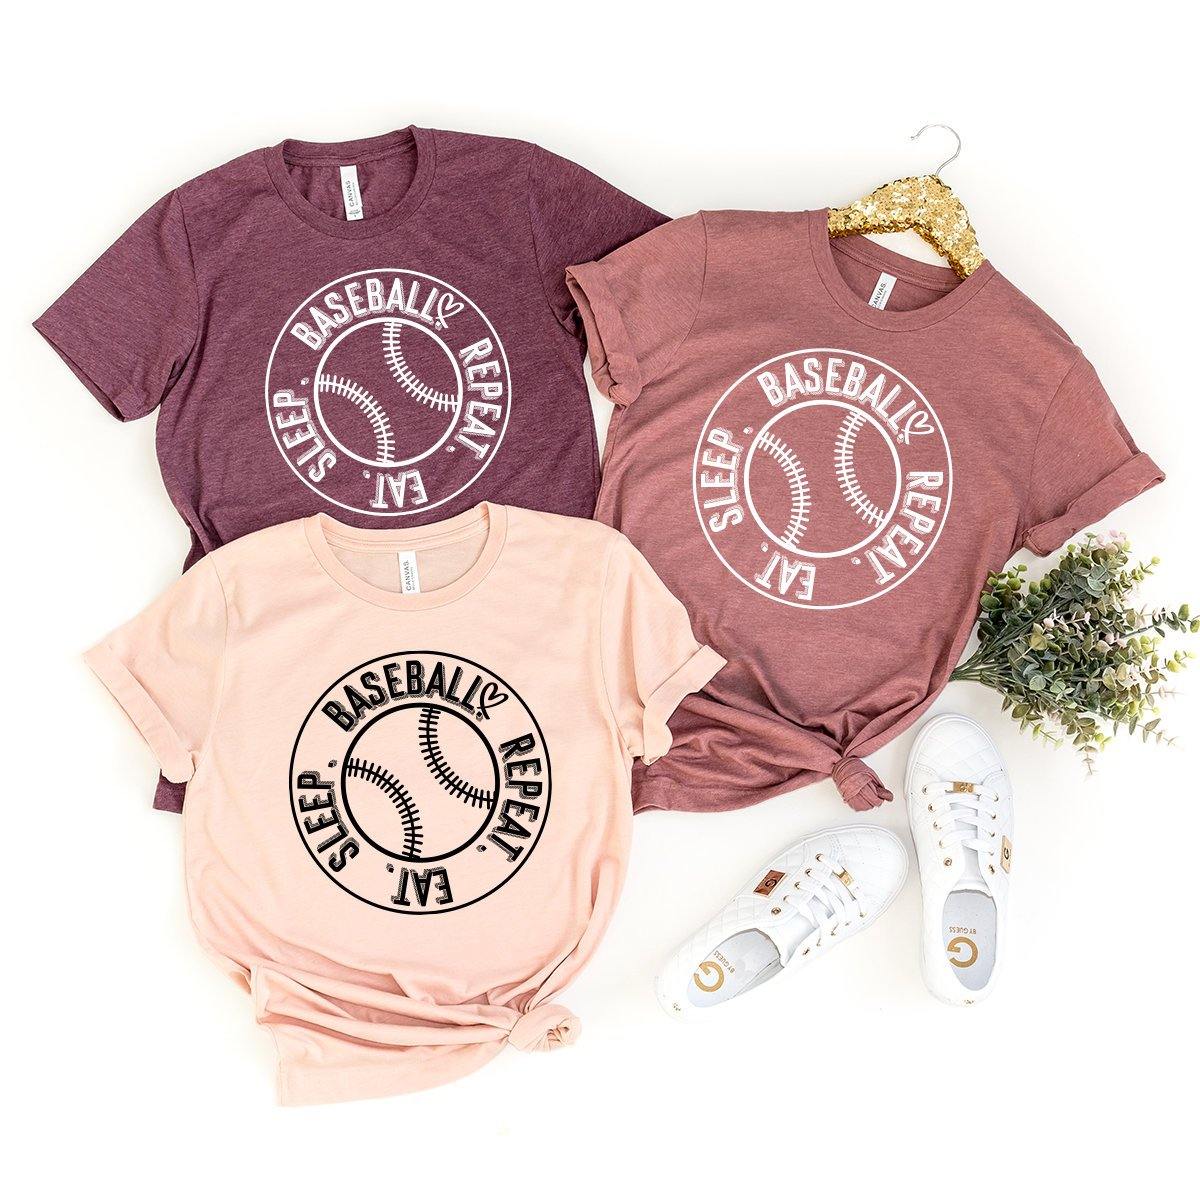 Baseball T-Shirt, Eat Sleep Baseball Repeat Shirt, Baseball Slogan Shirt, Baseball Lover Gift, Baseball Player Tshirt, Funny Baseball Tee - Fastdeliverytees.com